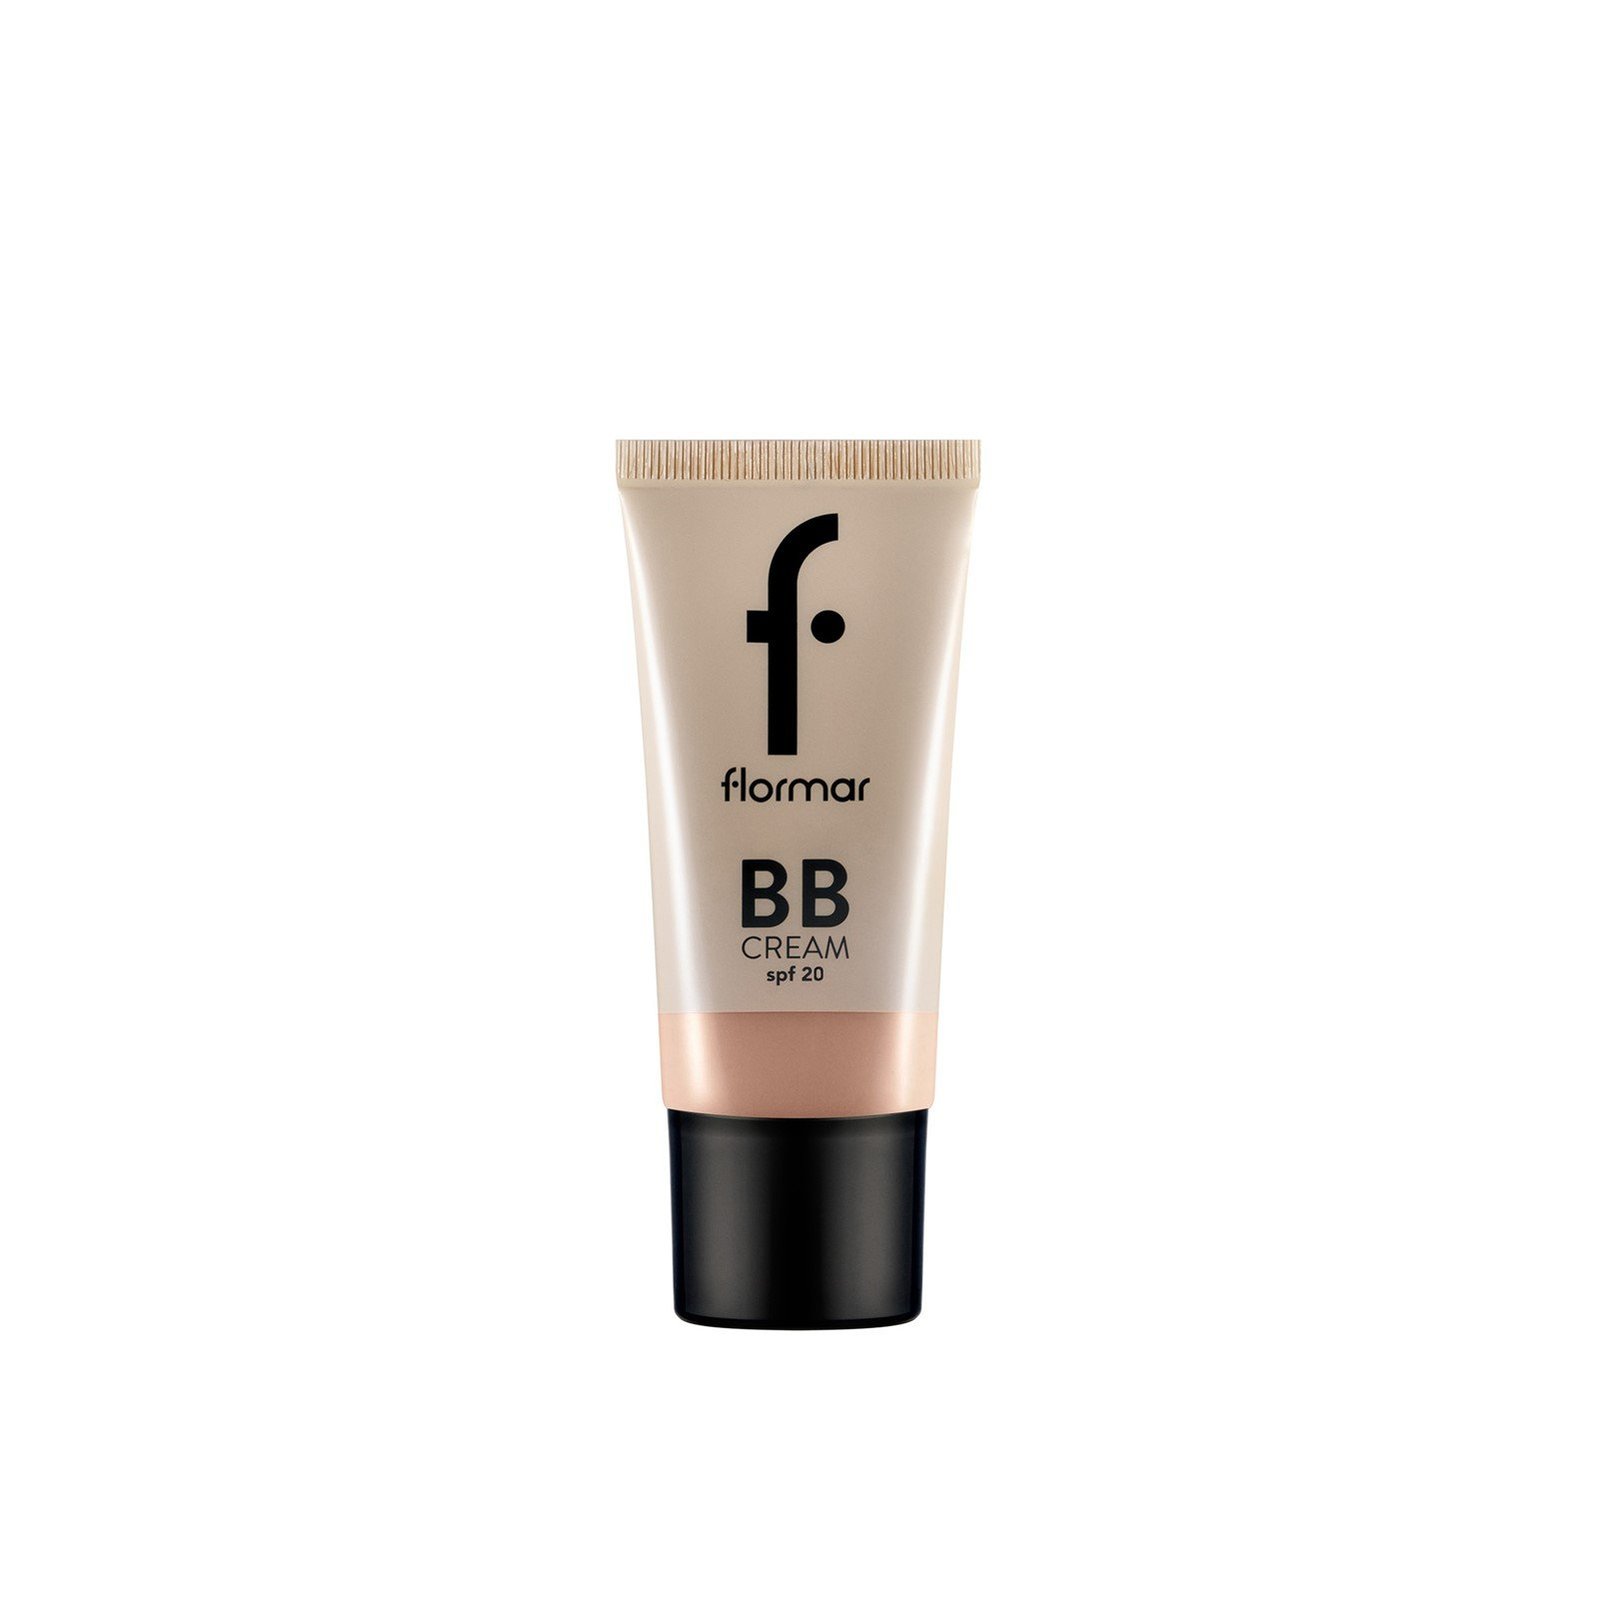 Flormar BB Cream SPF20 04 Light/Medium 35ml